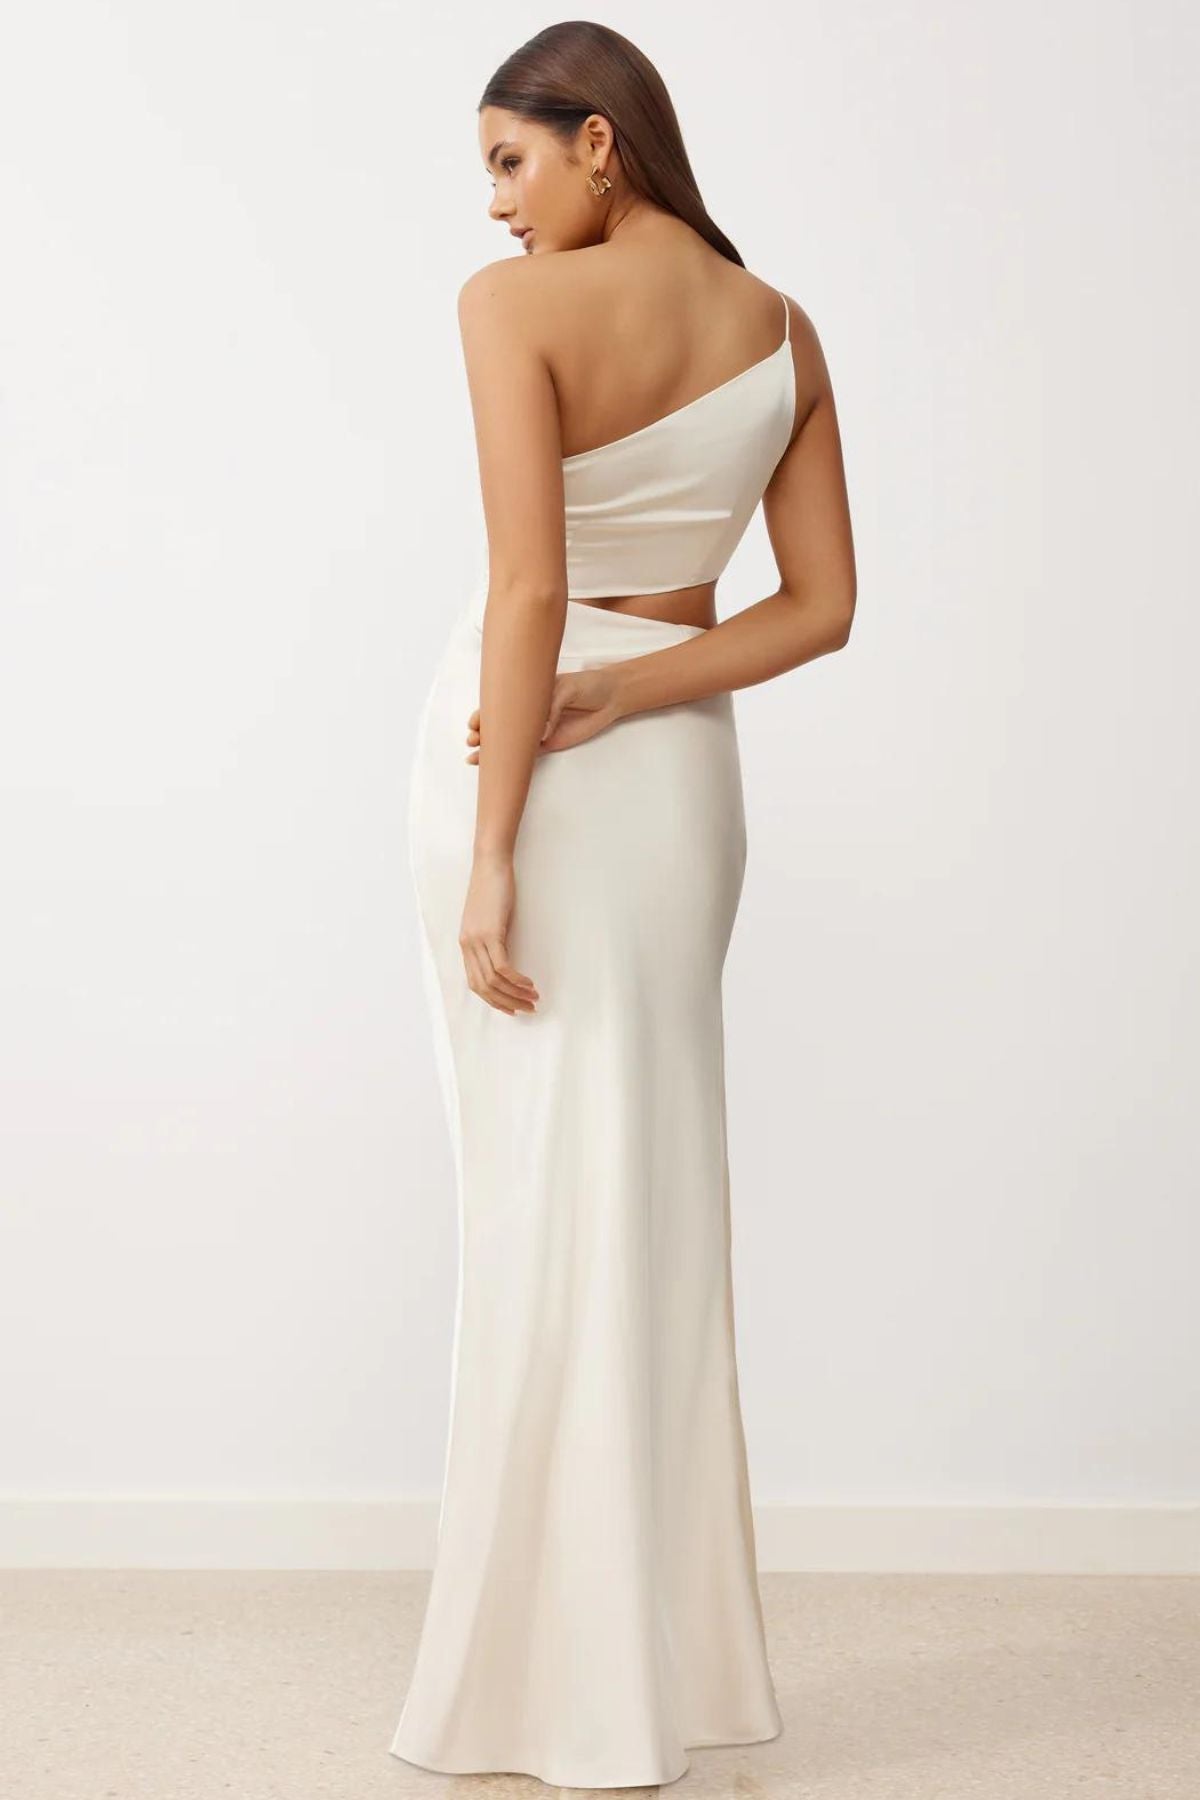 Lexi LEXI Delta Dress (Oyster White) RRP $349 - 7_476ef2c4-4fc5-4c7a-ad20-d1db0ffb15f7.jpg